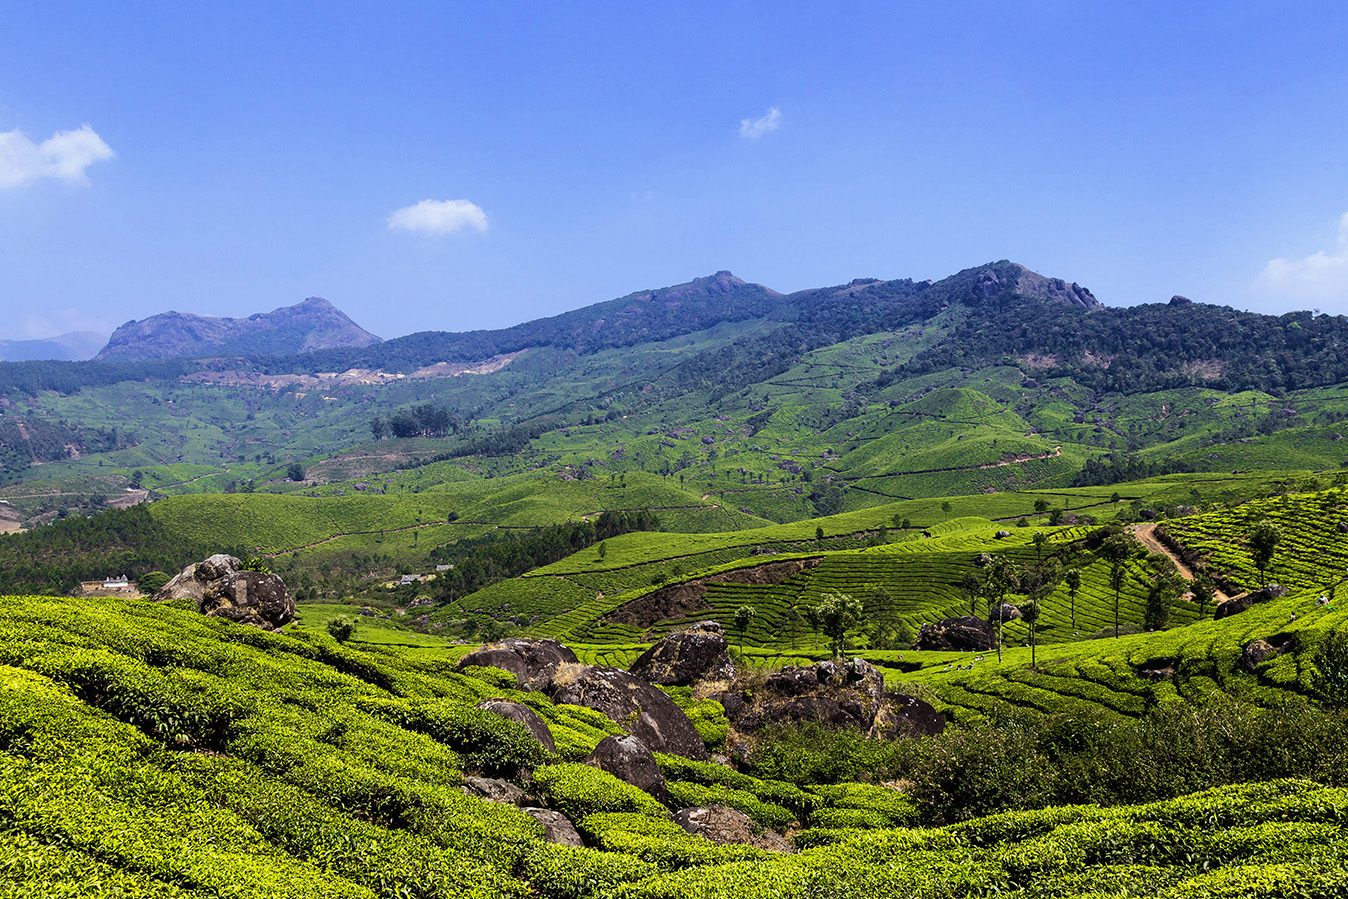 Tea Plantation in Munnar, Kerala